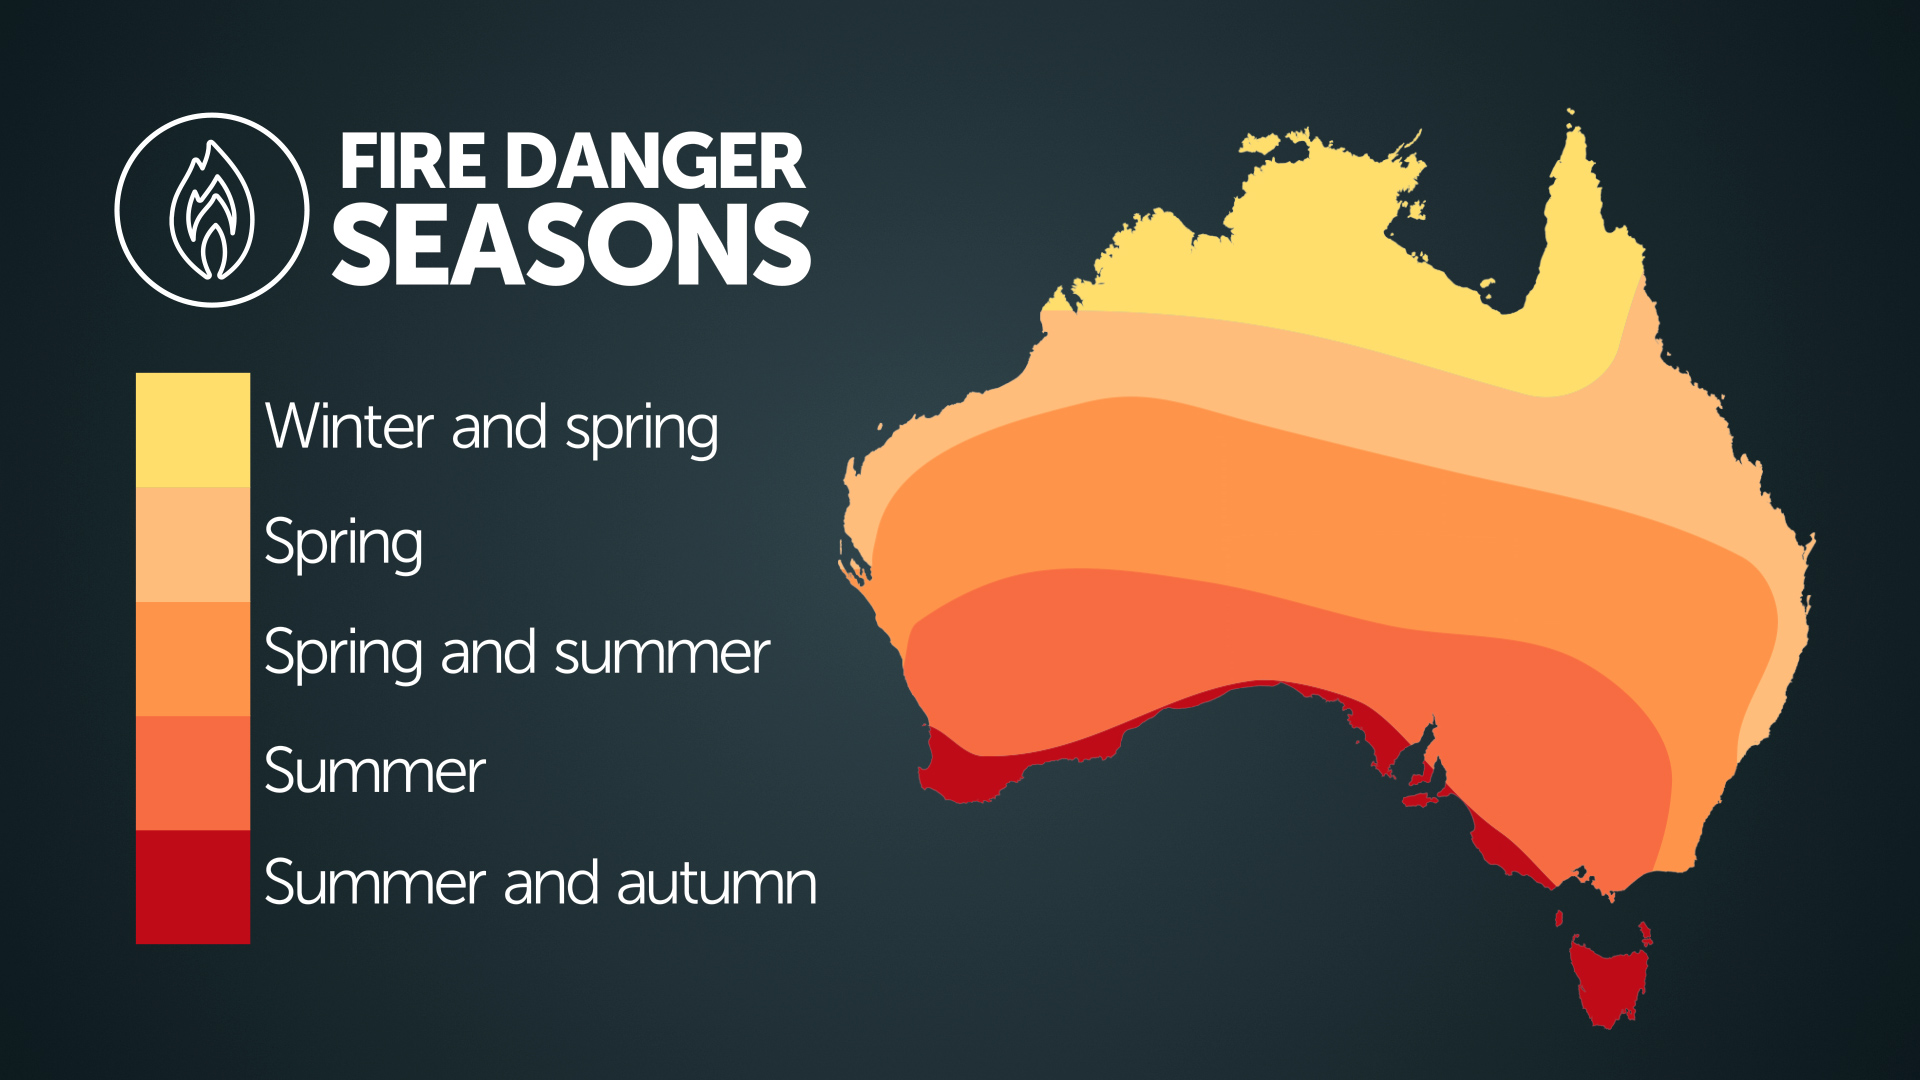 Fire danger seasons across Australia